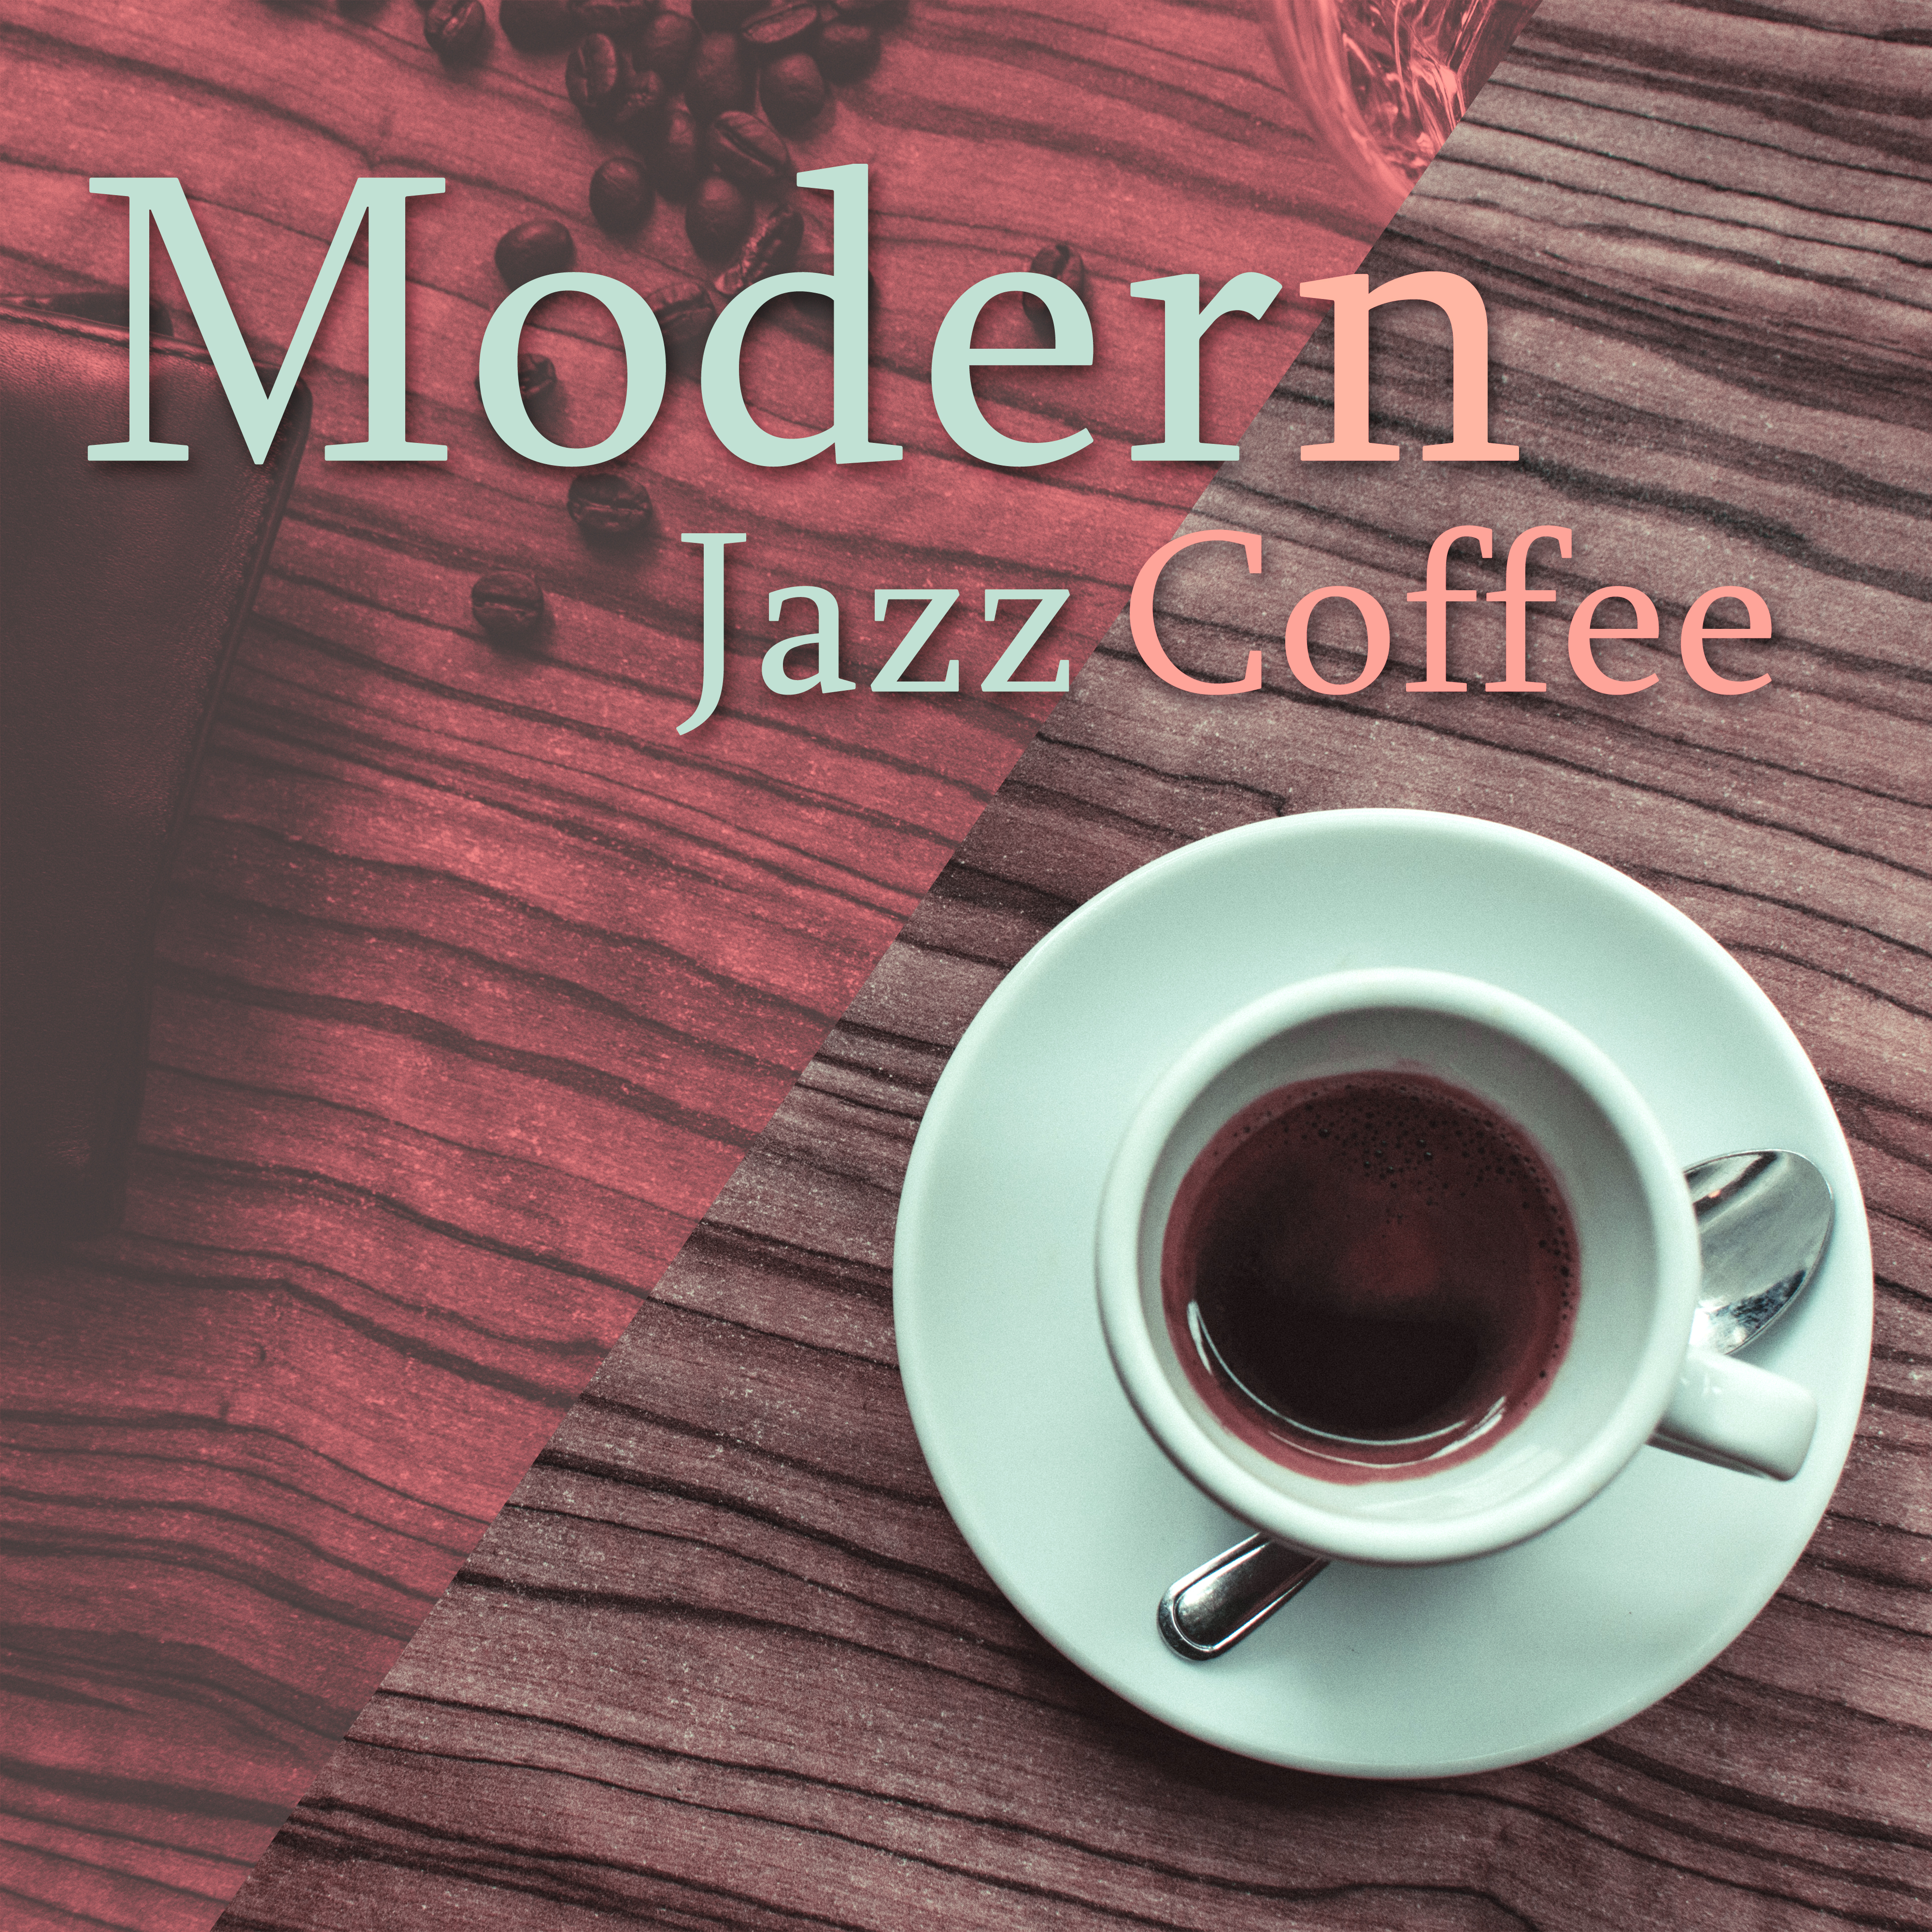 Modern Jazz Coffee